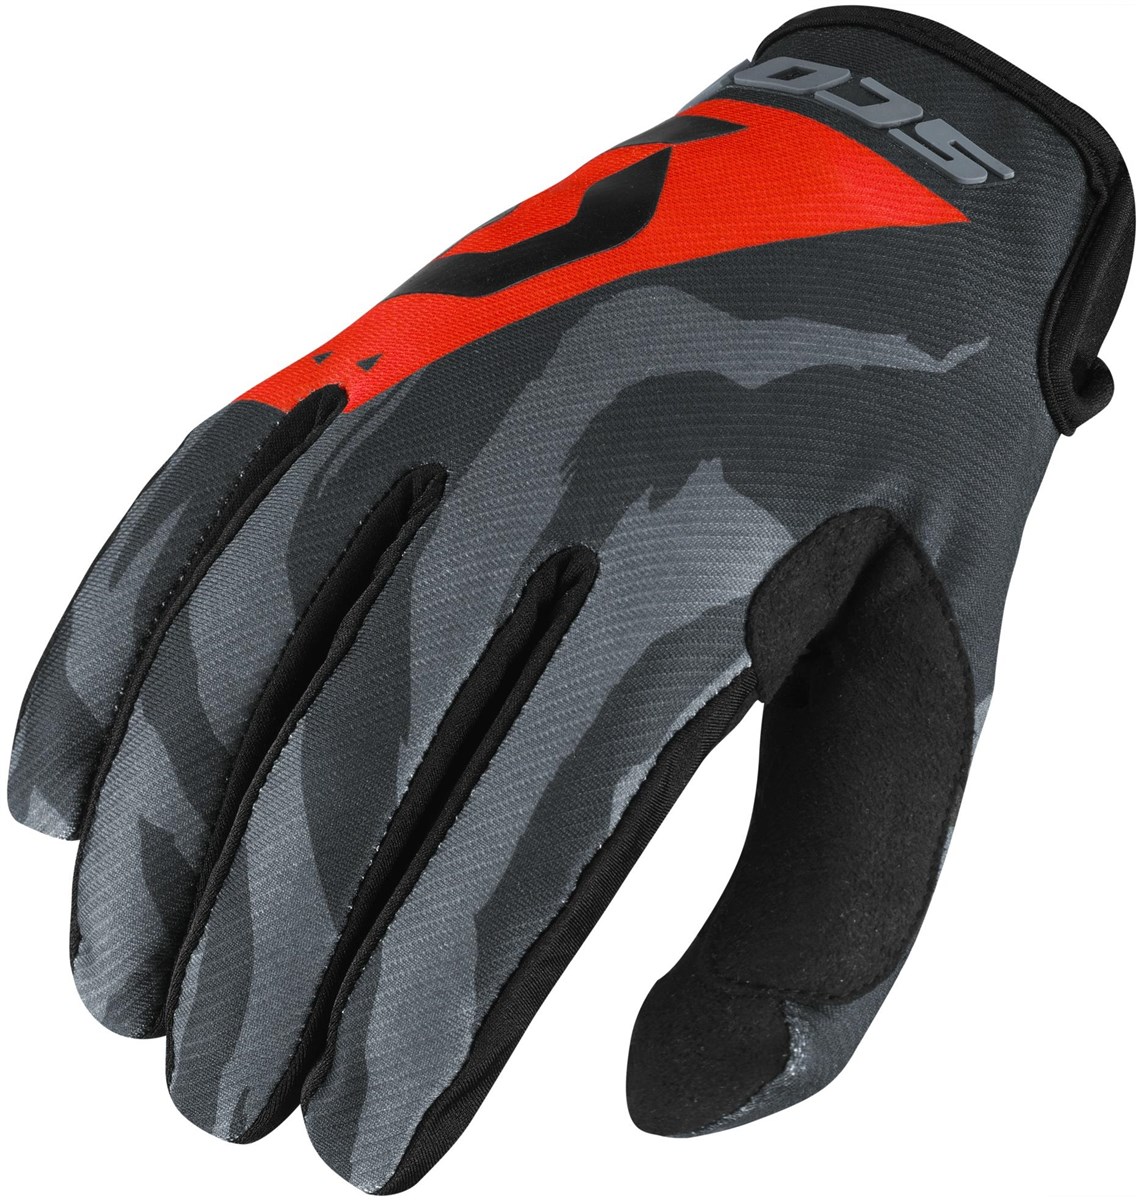 Scott 350 Race Long Finger Cycling Gloves